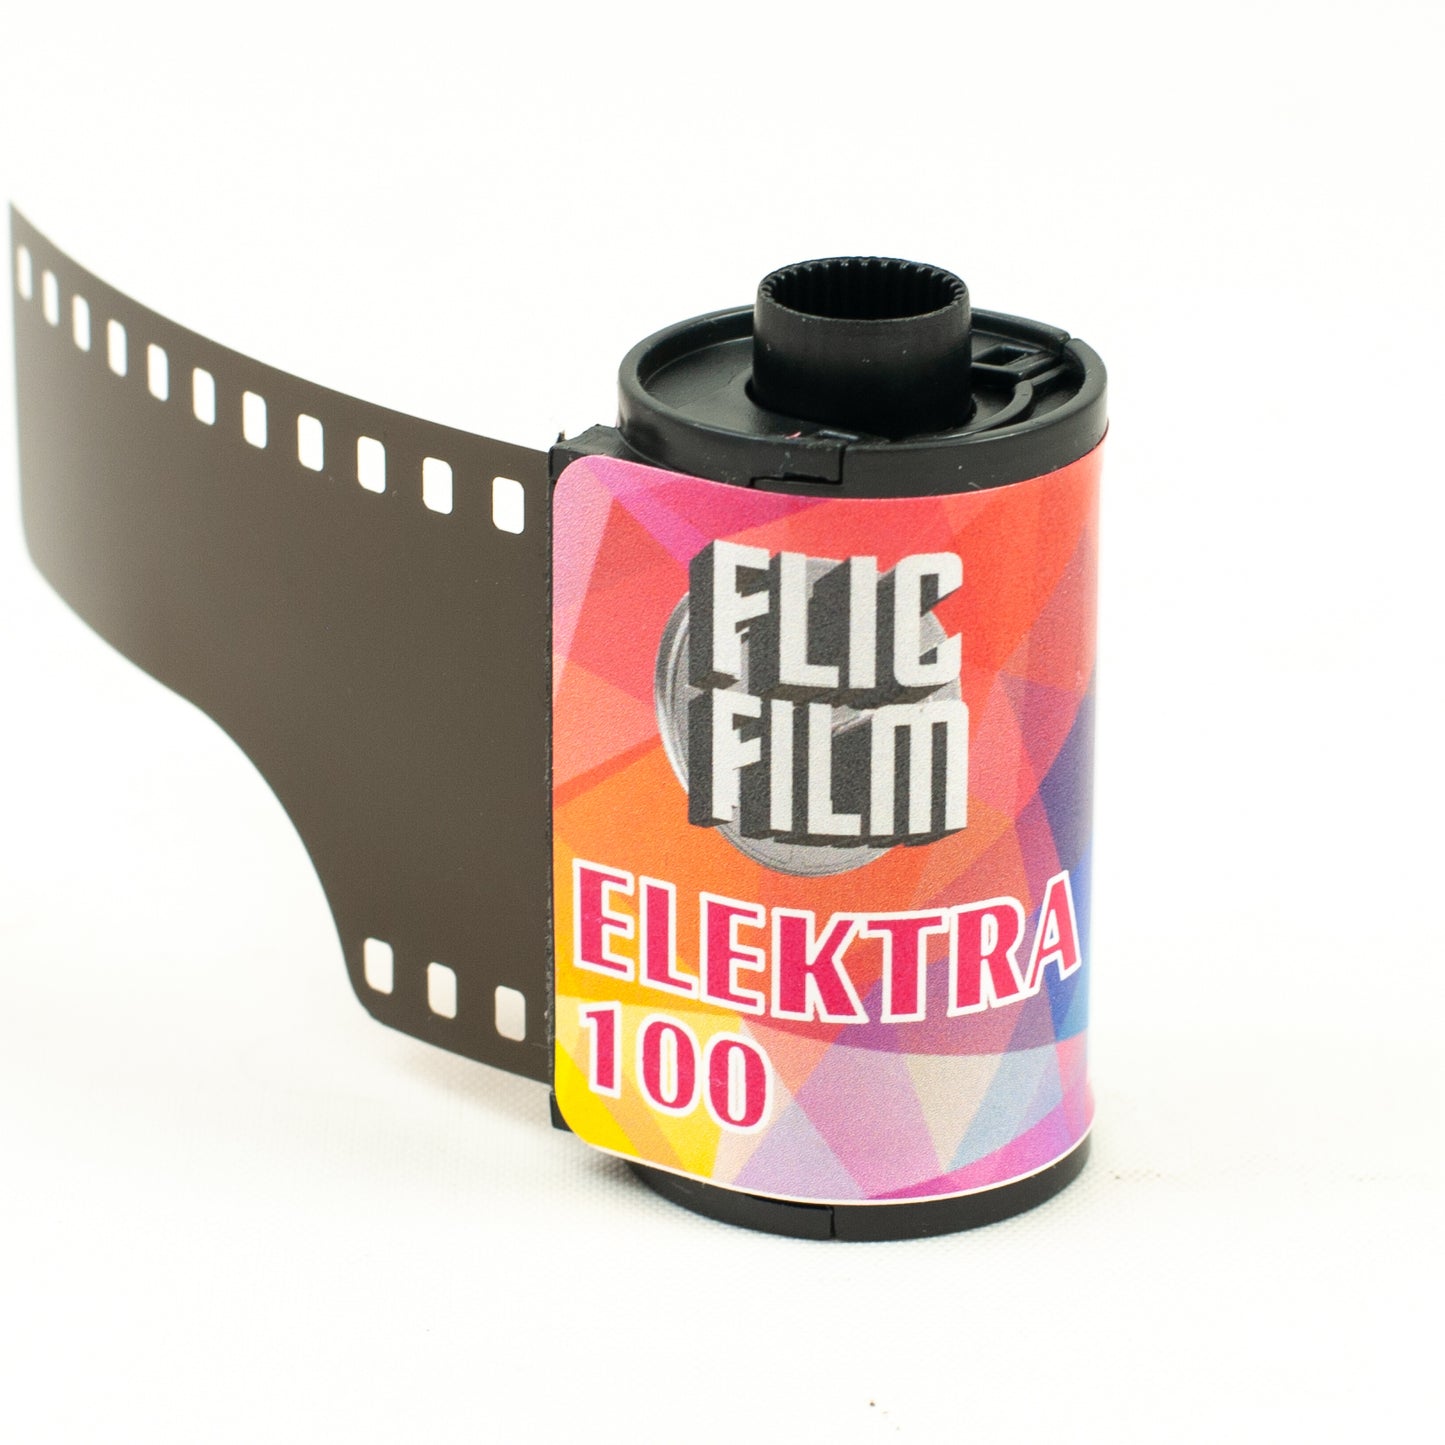 Flic Film Elektra 100 35mm Film 36 Exposures - Parallax